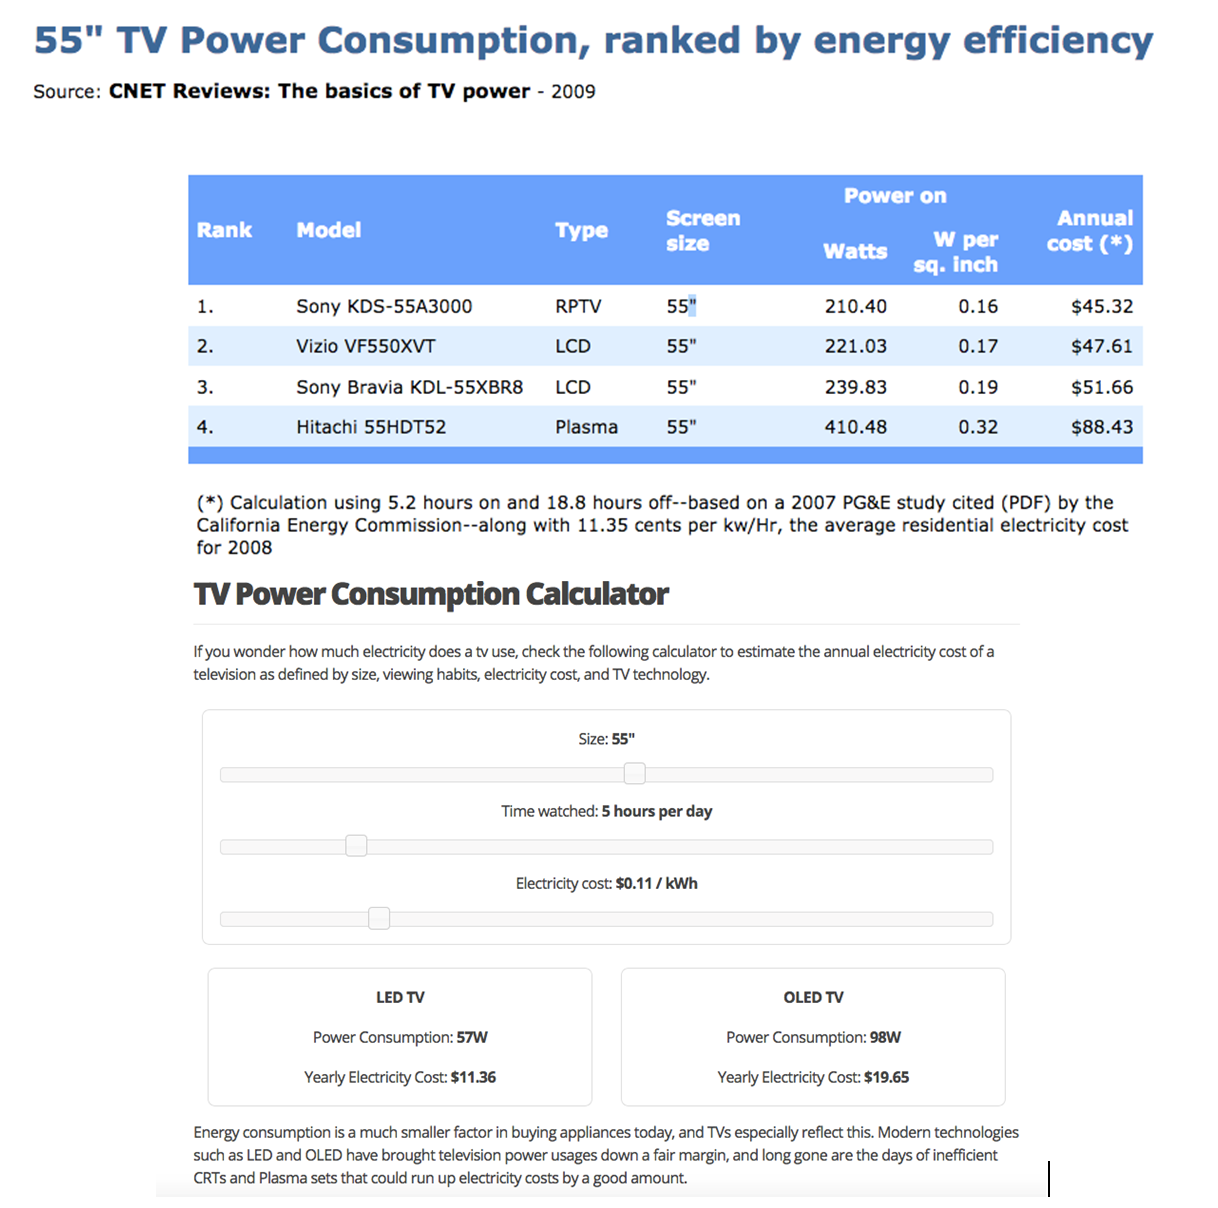 Power consumption